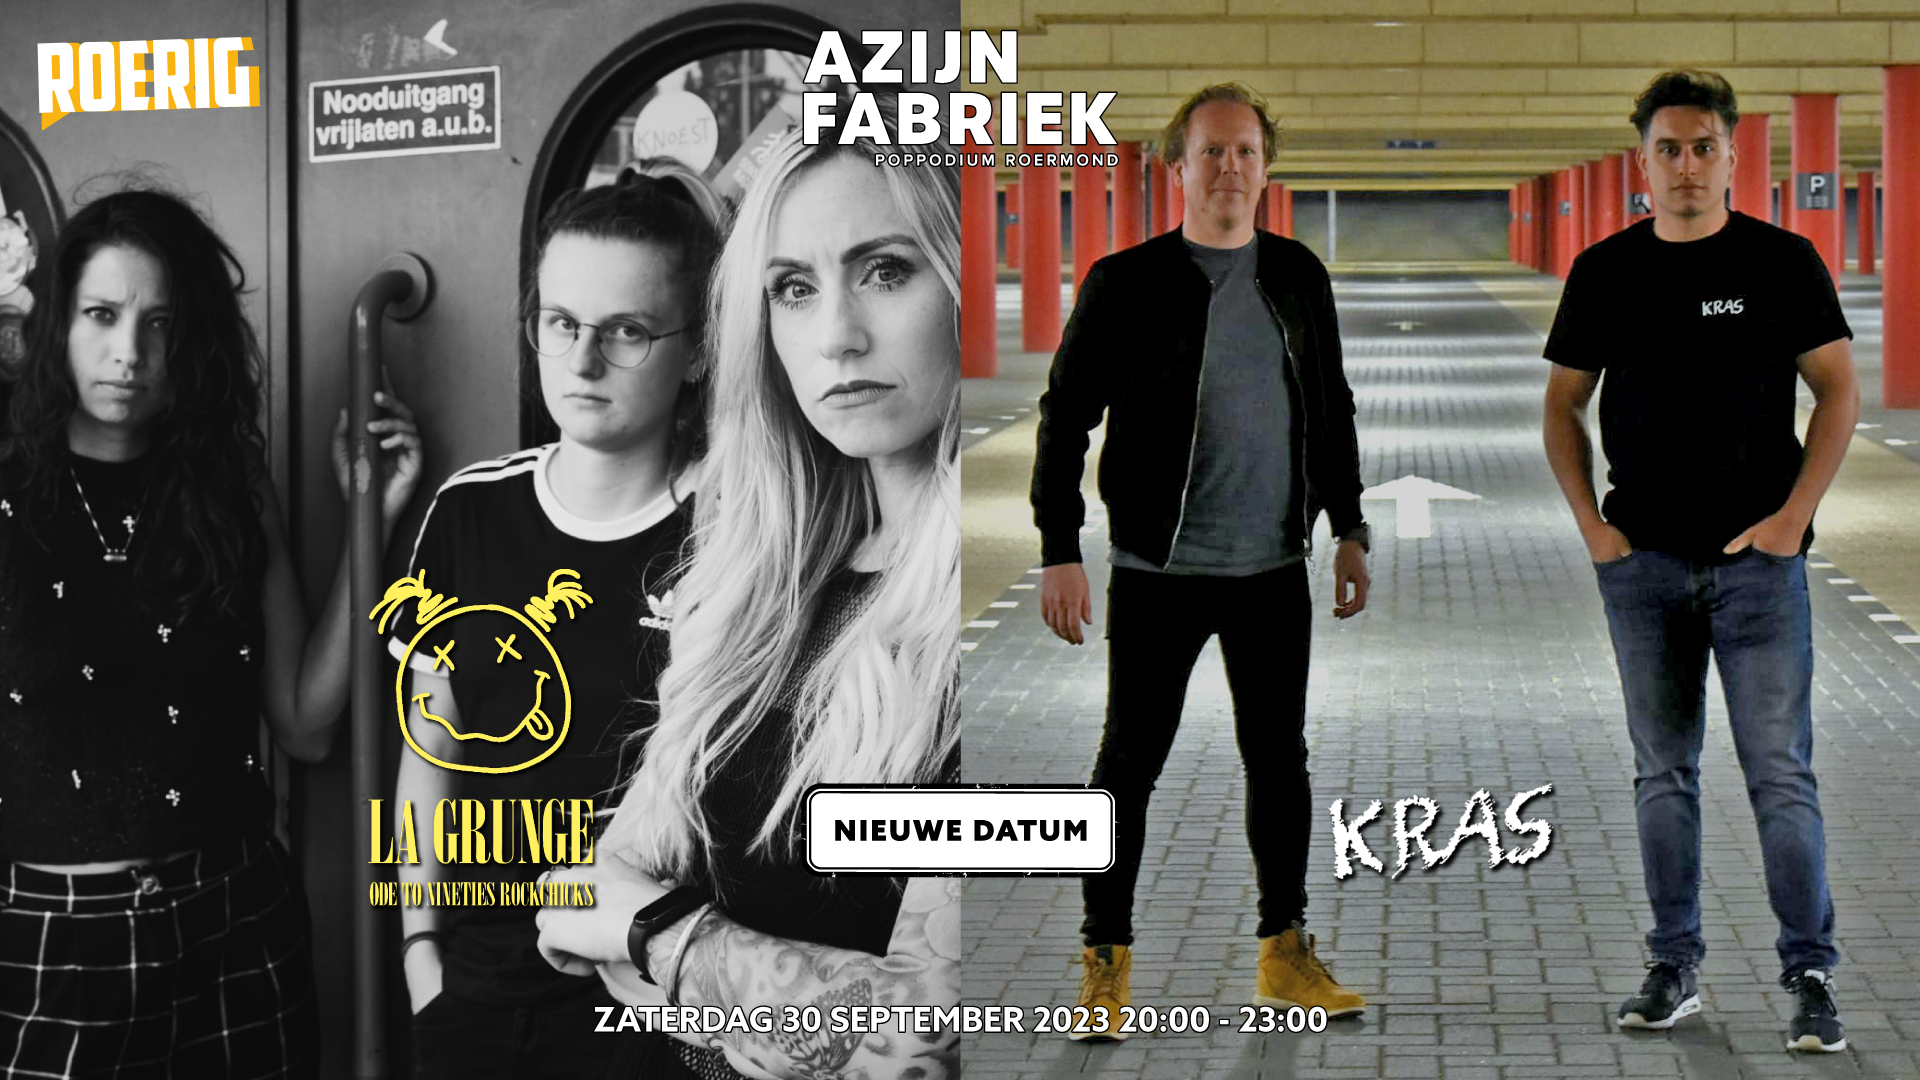 Azijnfabriek | Concert - La Grunge - Ode to nineties rockchicks + KRAS | Roerig